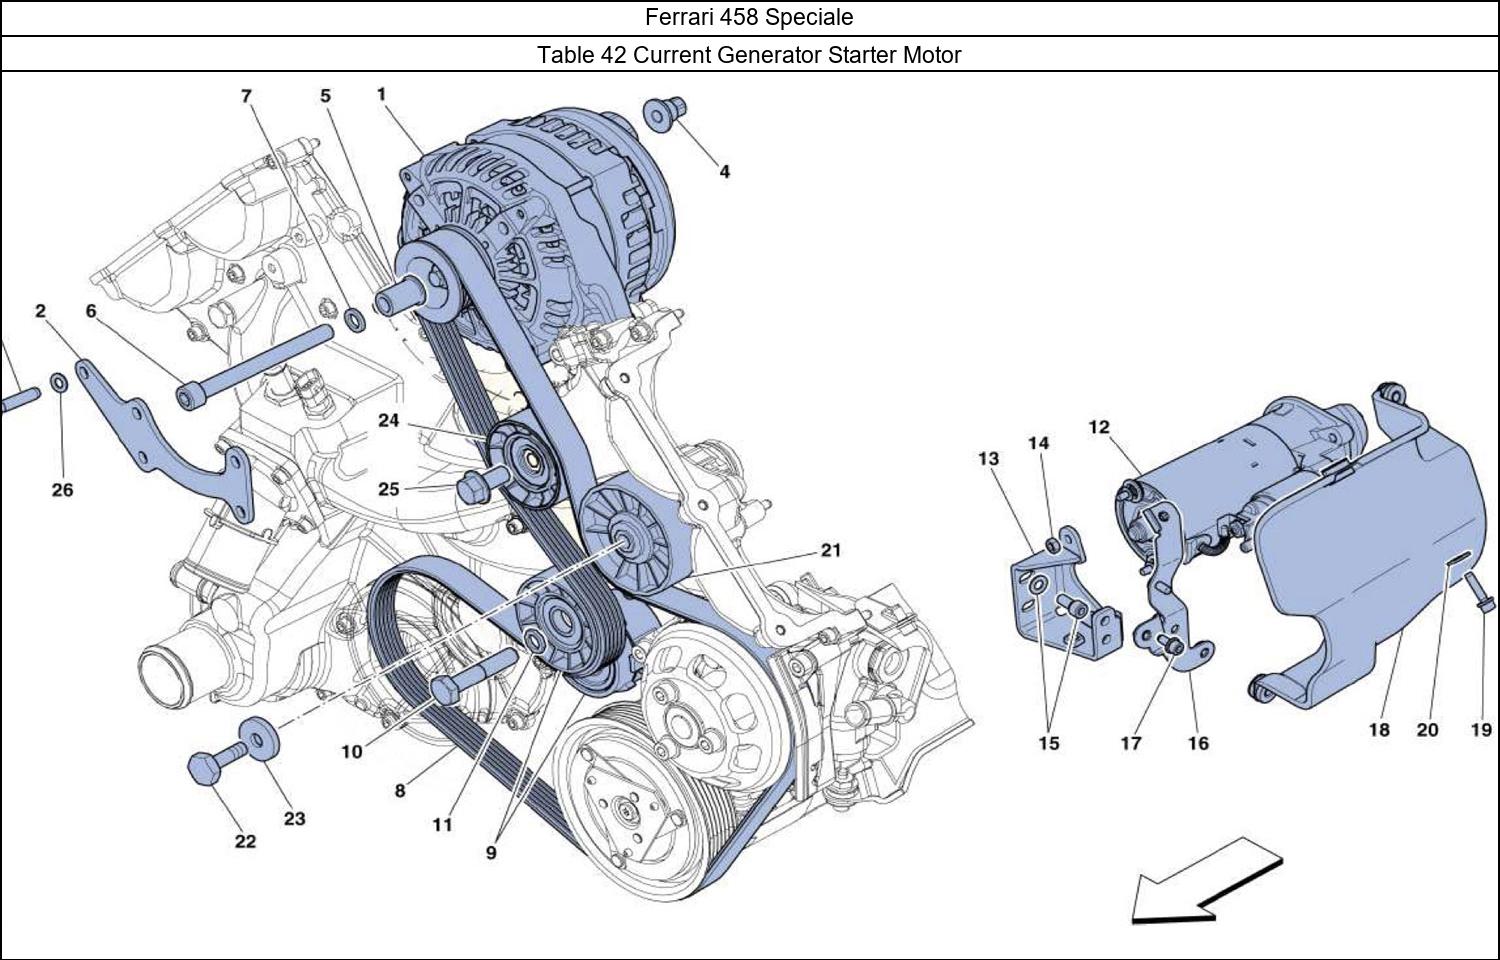 Ferrari Parts Ferrari 458 Speciale Table 42 Current Generator Starter Motor